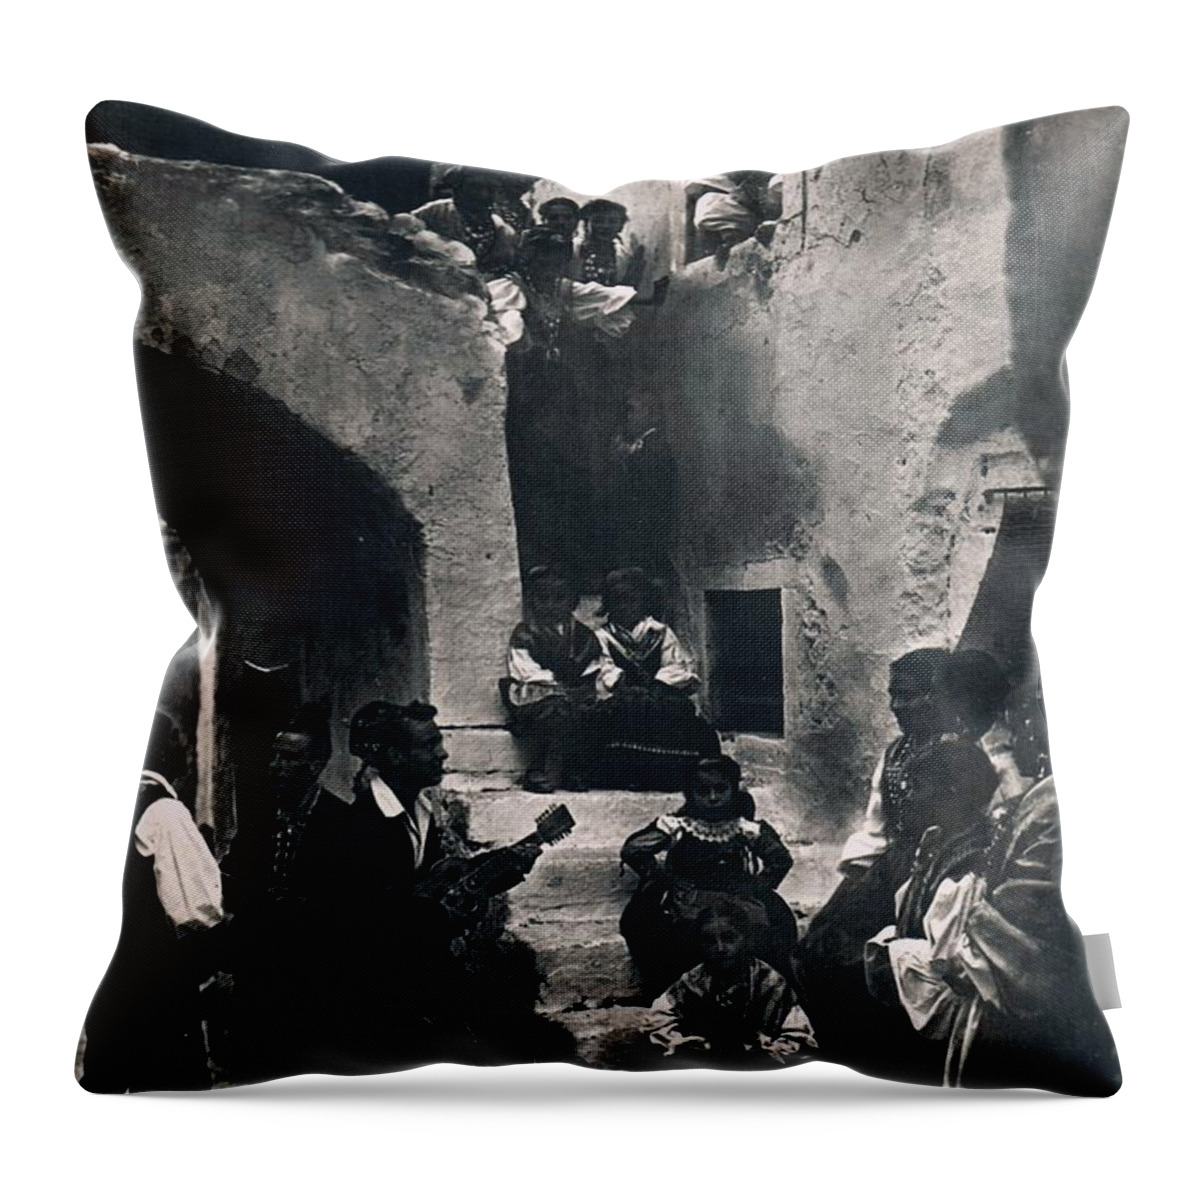 Group Throw Pillow featuring the photograph Serenata by Matteo TOTARO